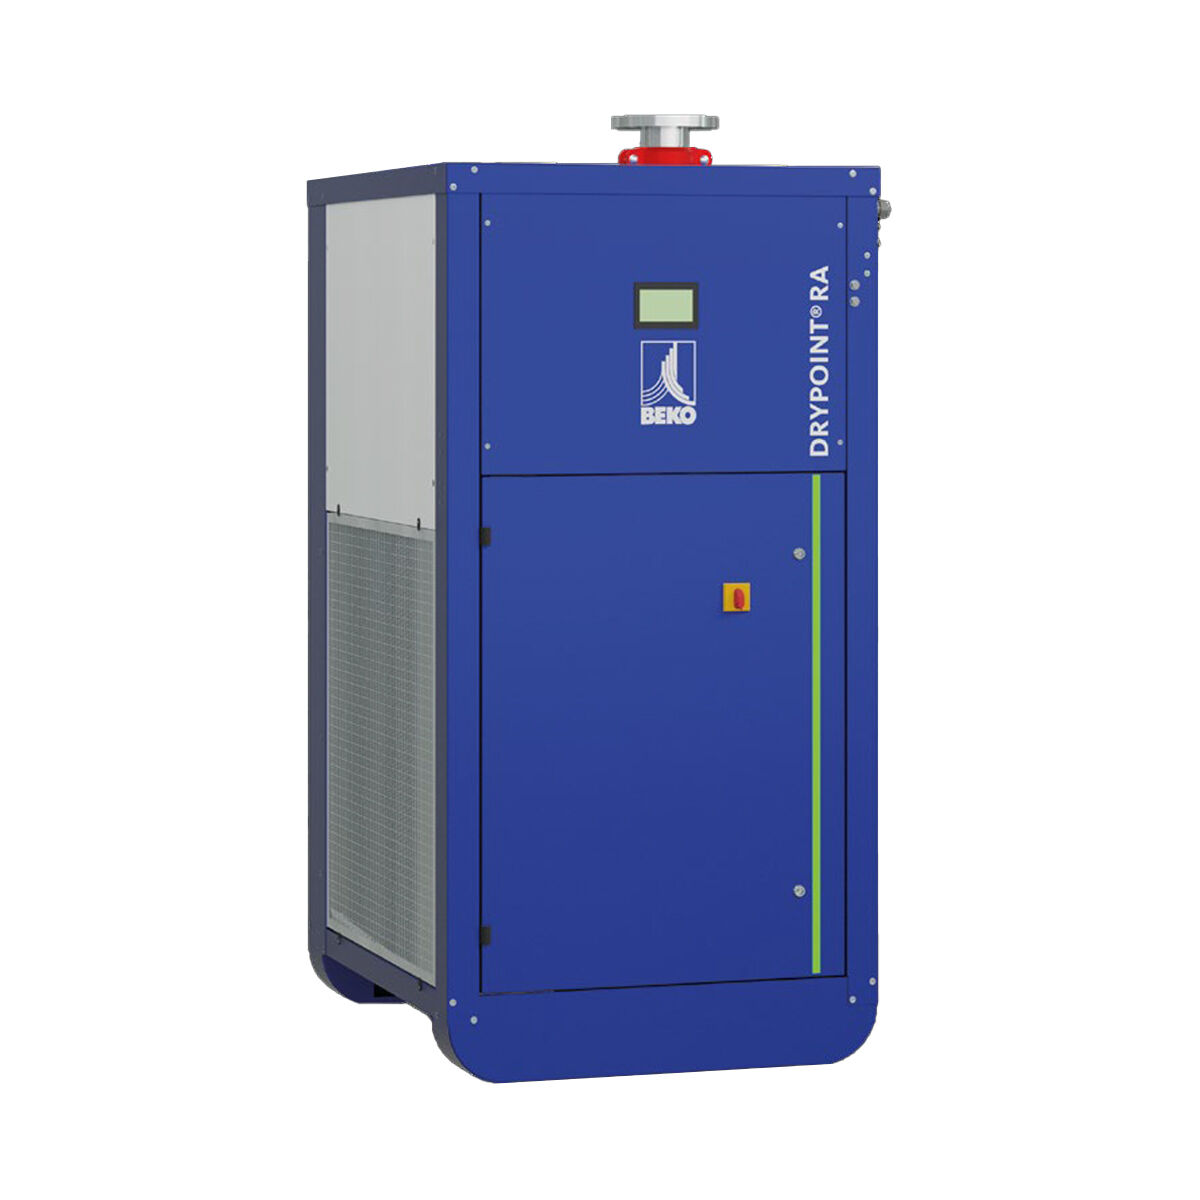 BEKO DRYPOINT RA III 50/AC essiccatore a refrigerazione ad aria compressa con Bekomat, raffreddato ad aria